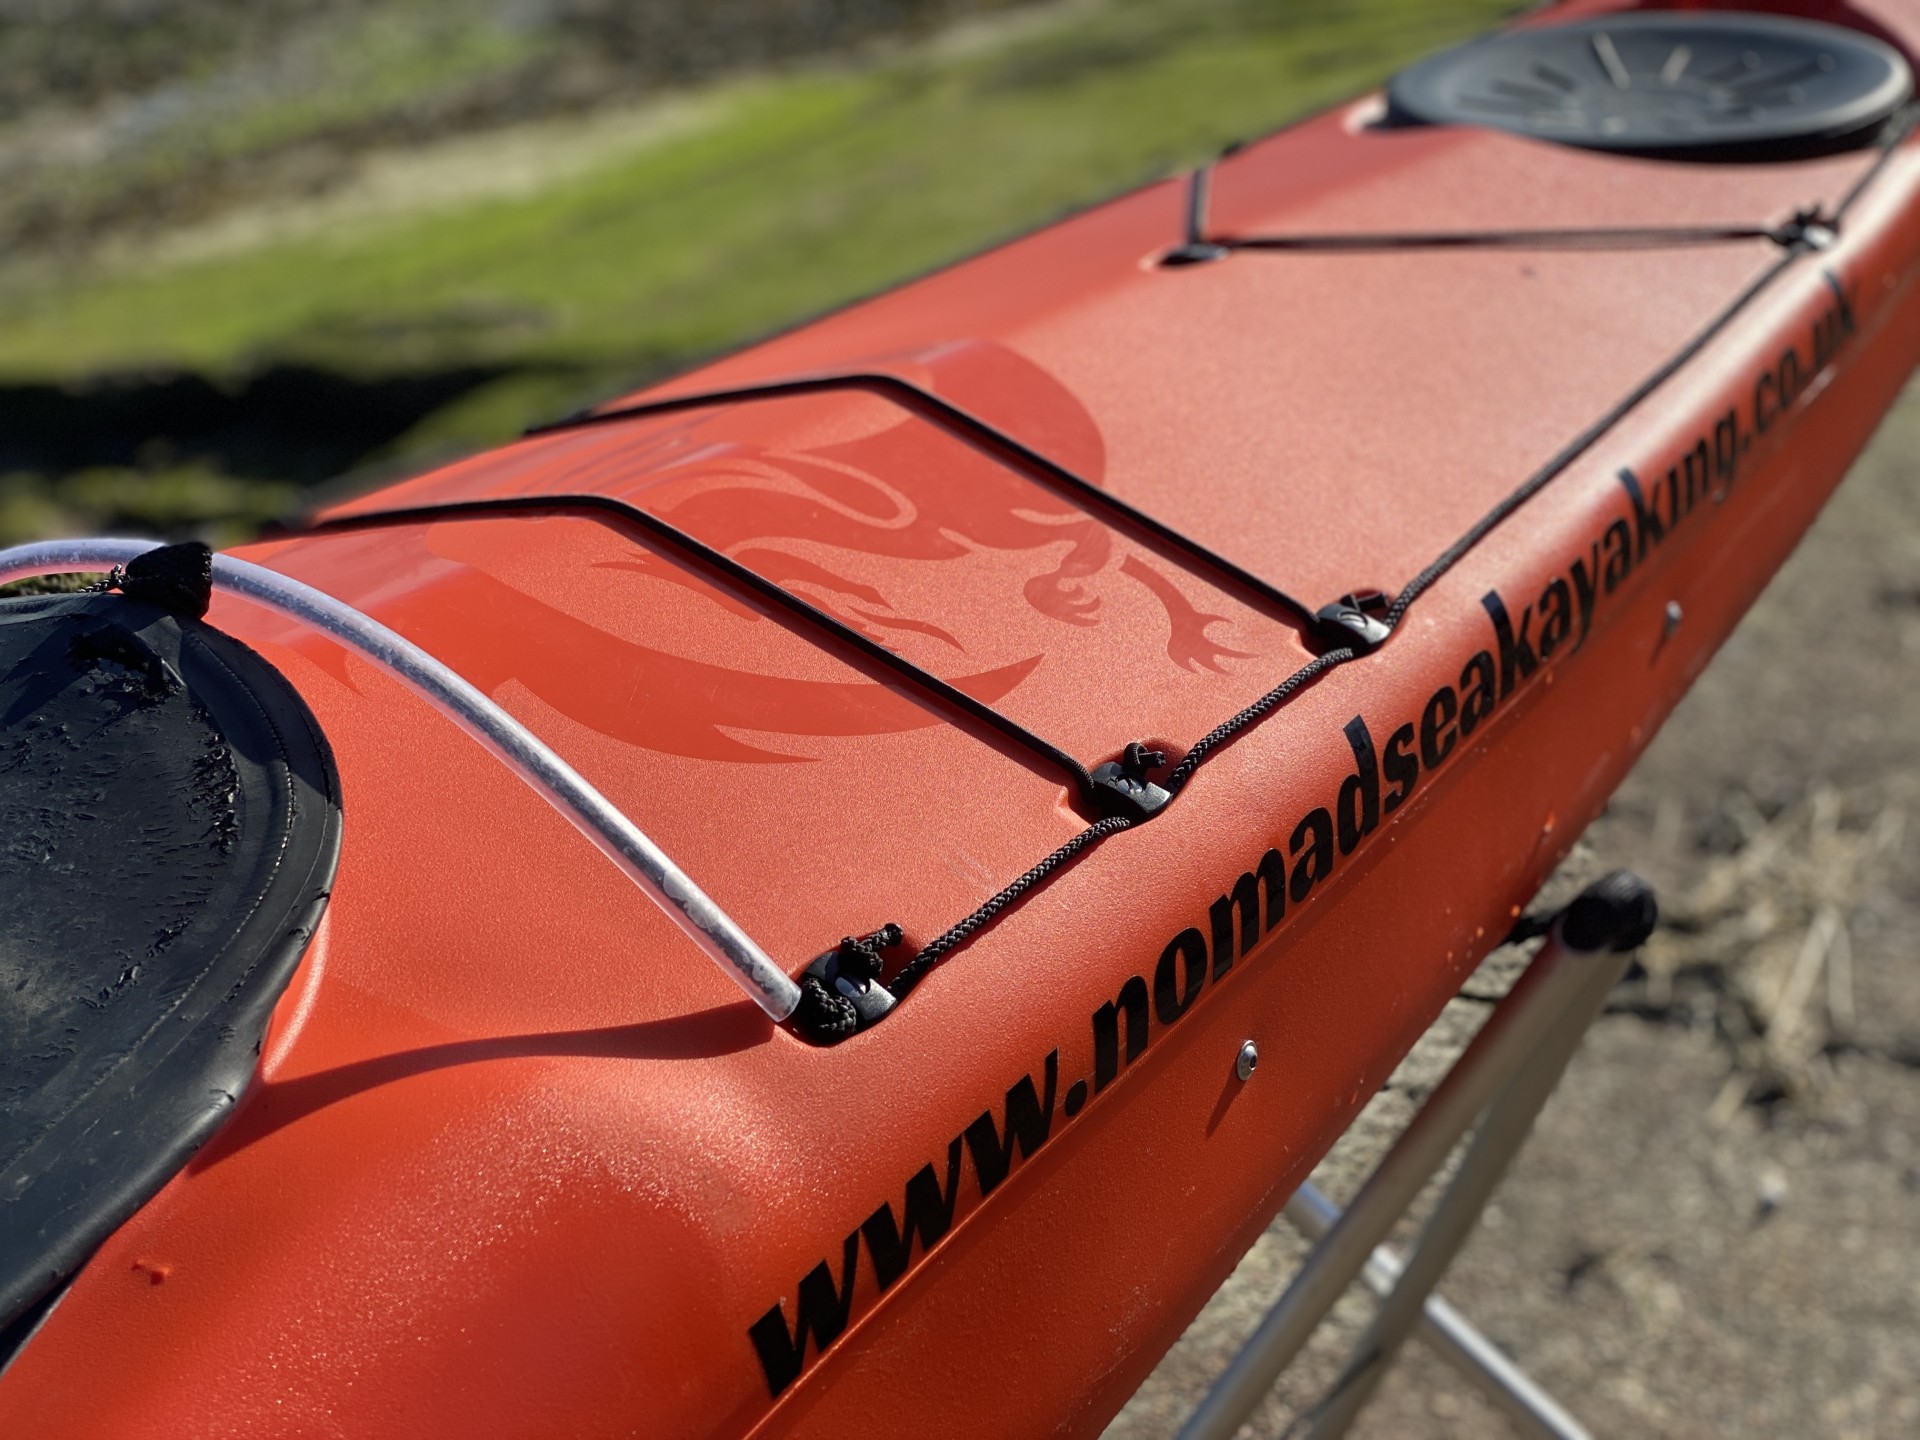 NDK sea kayak in orange.